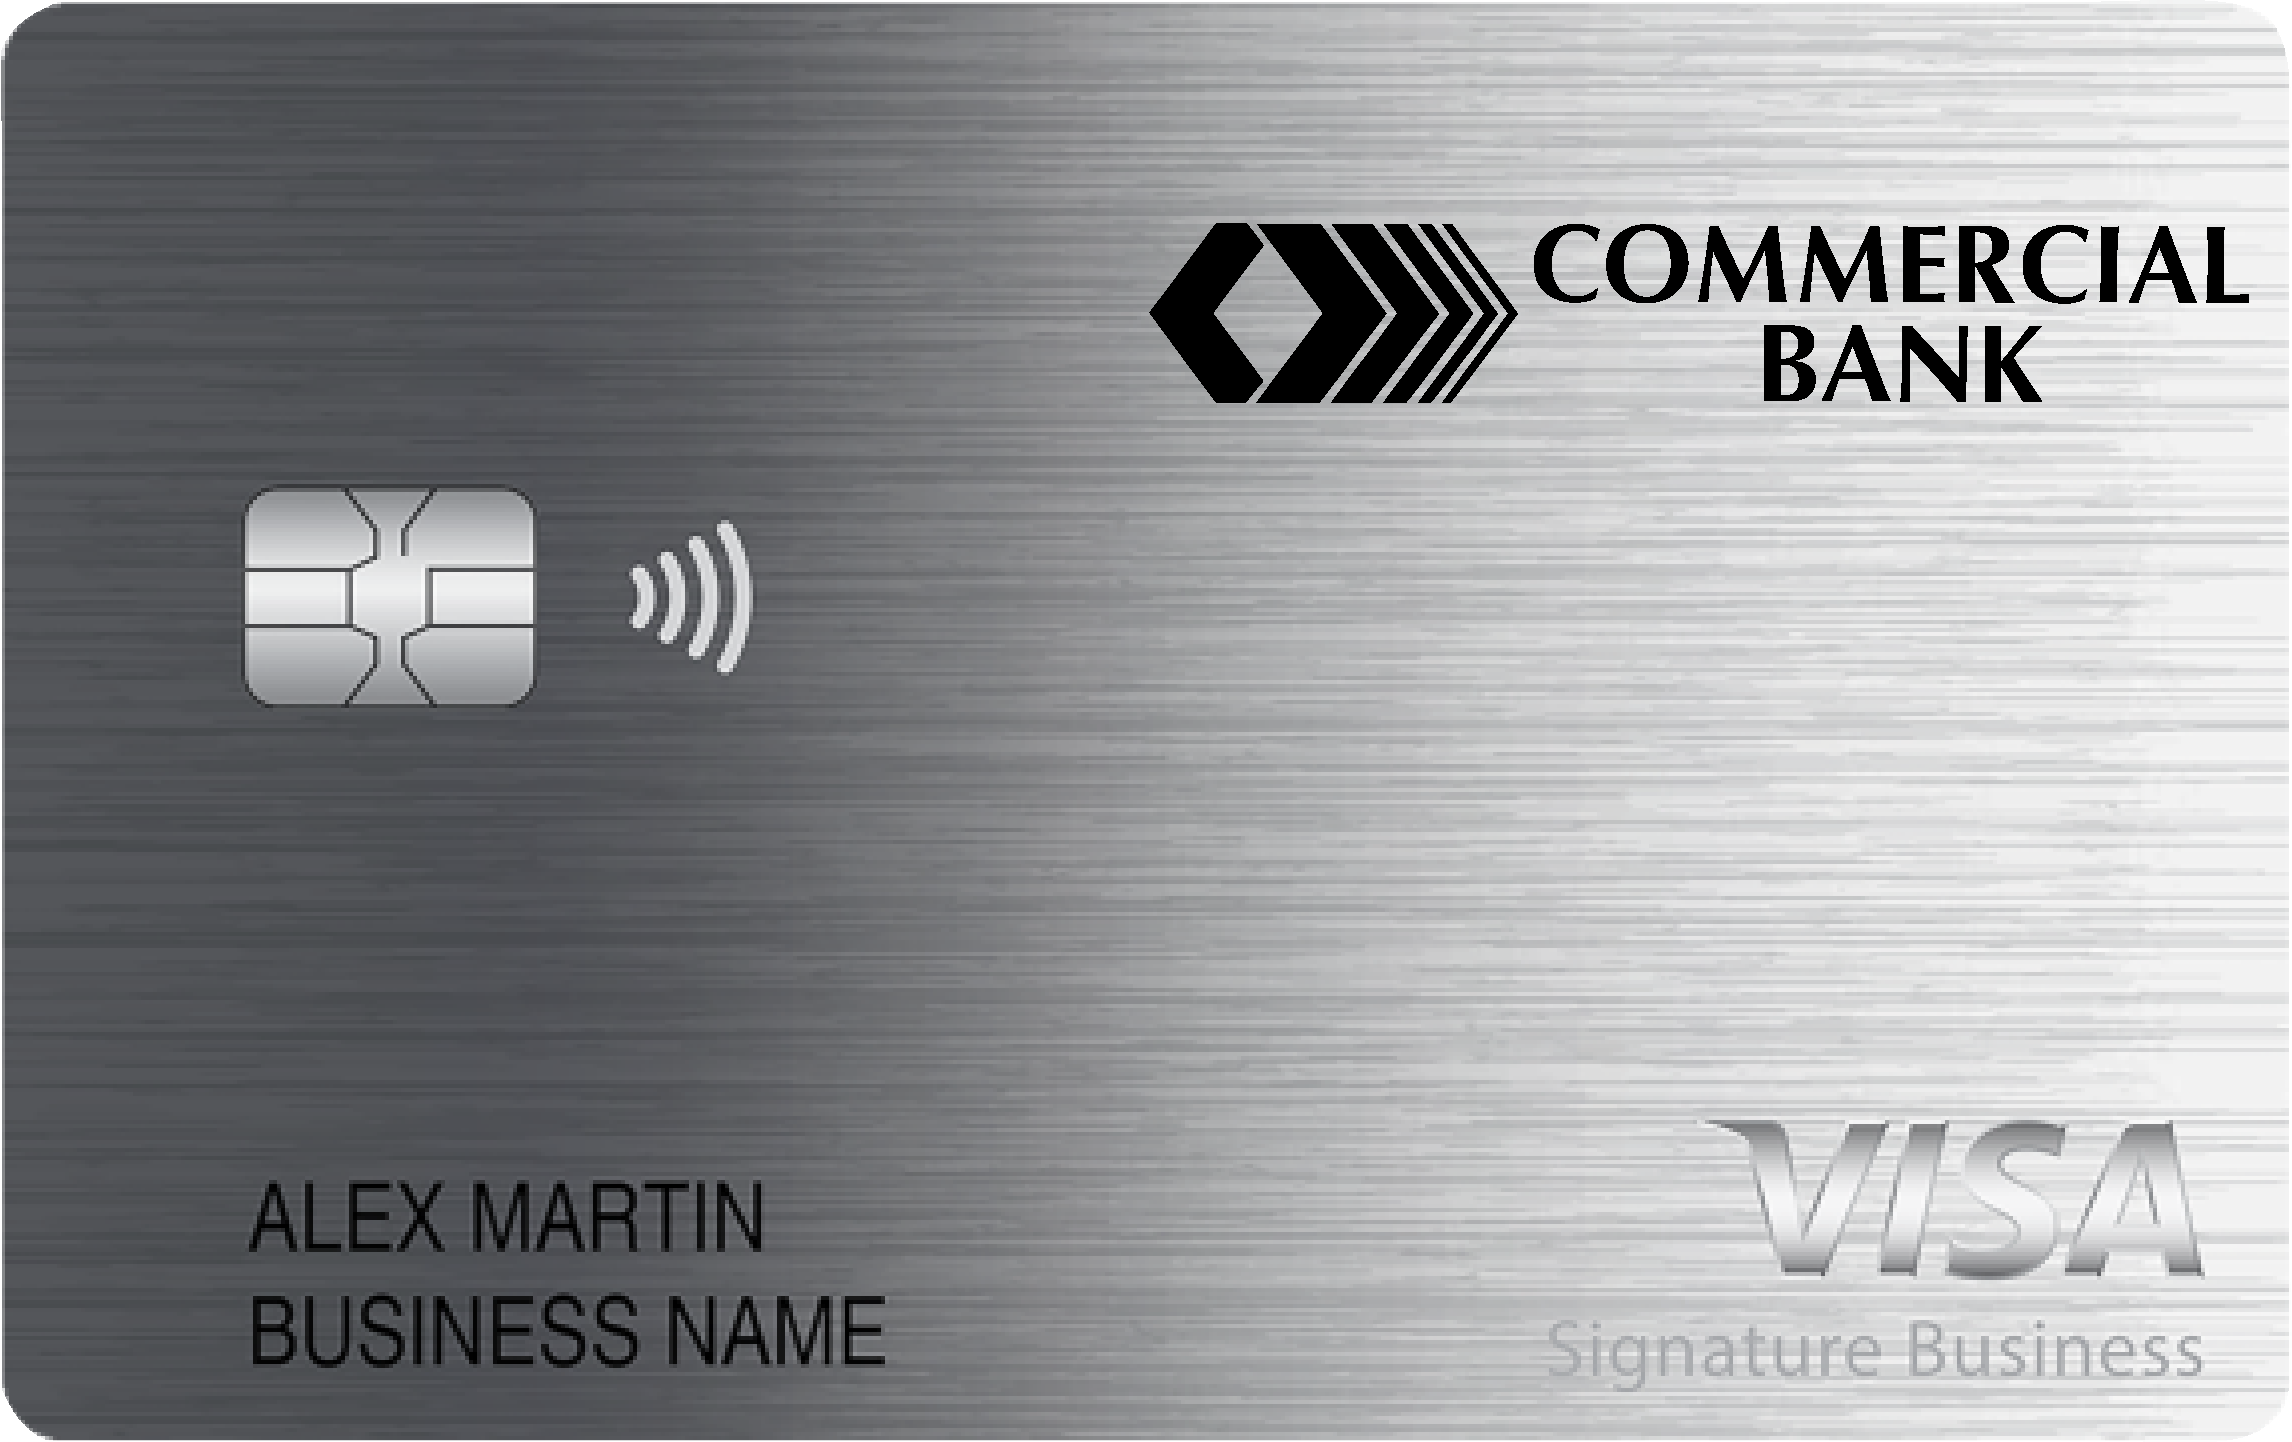 Commercial Bank Smart Business Rewards Card